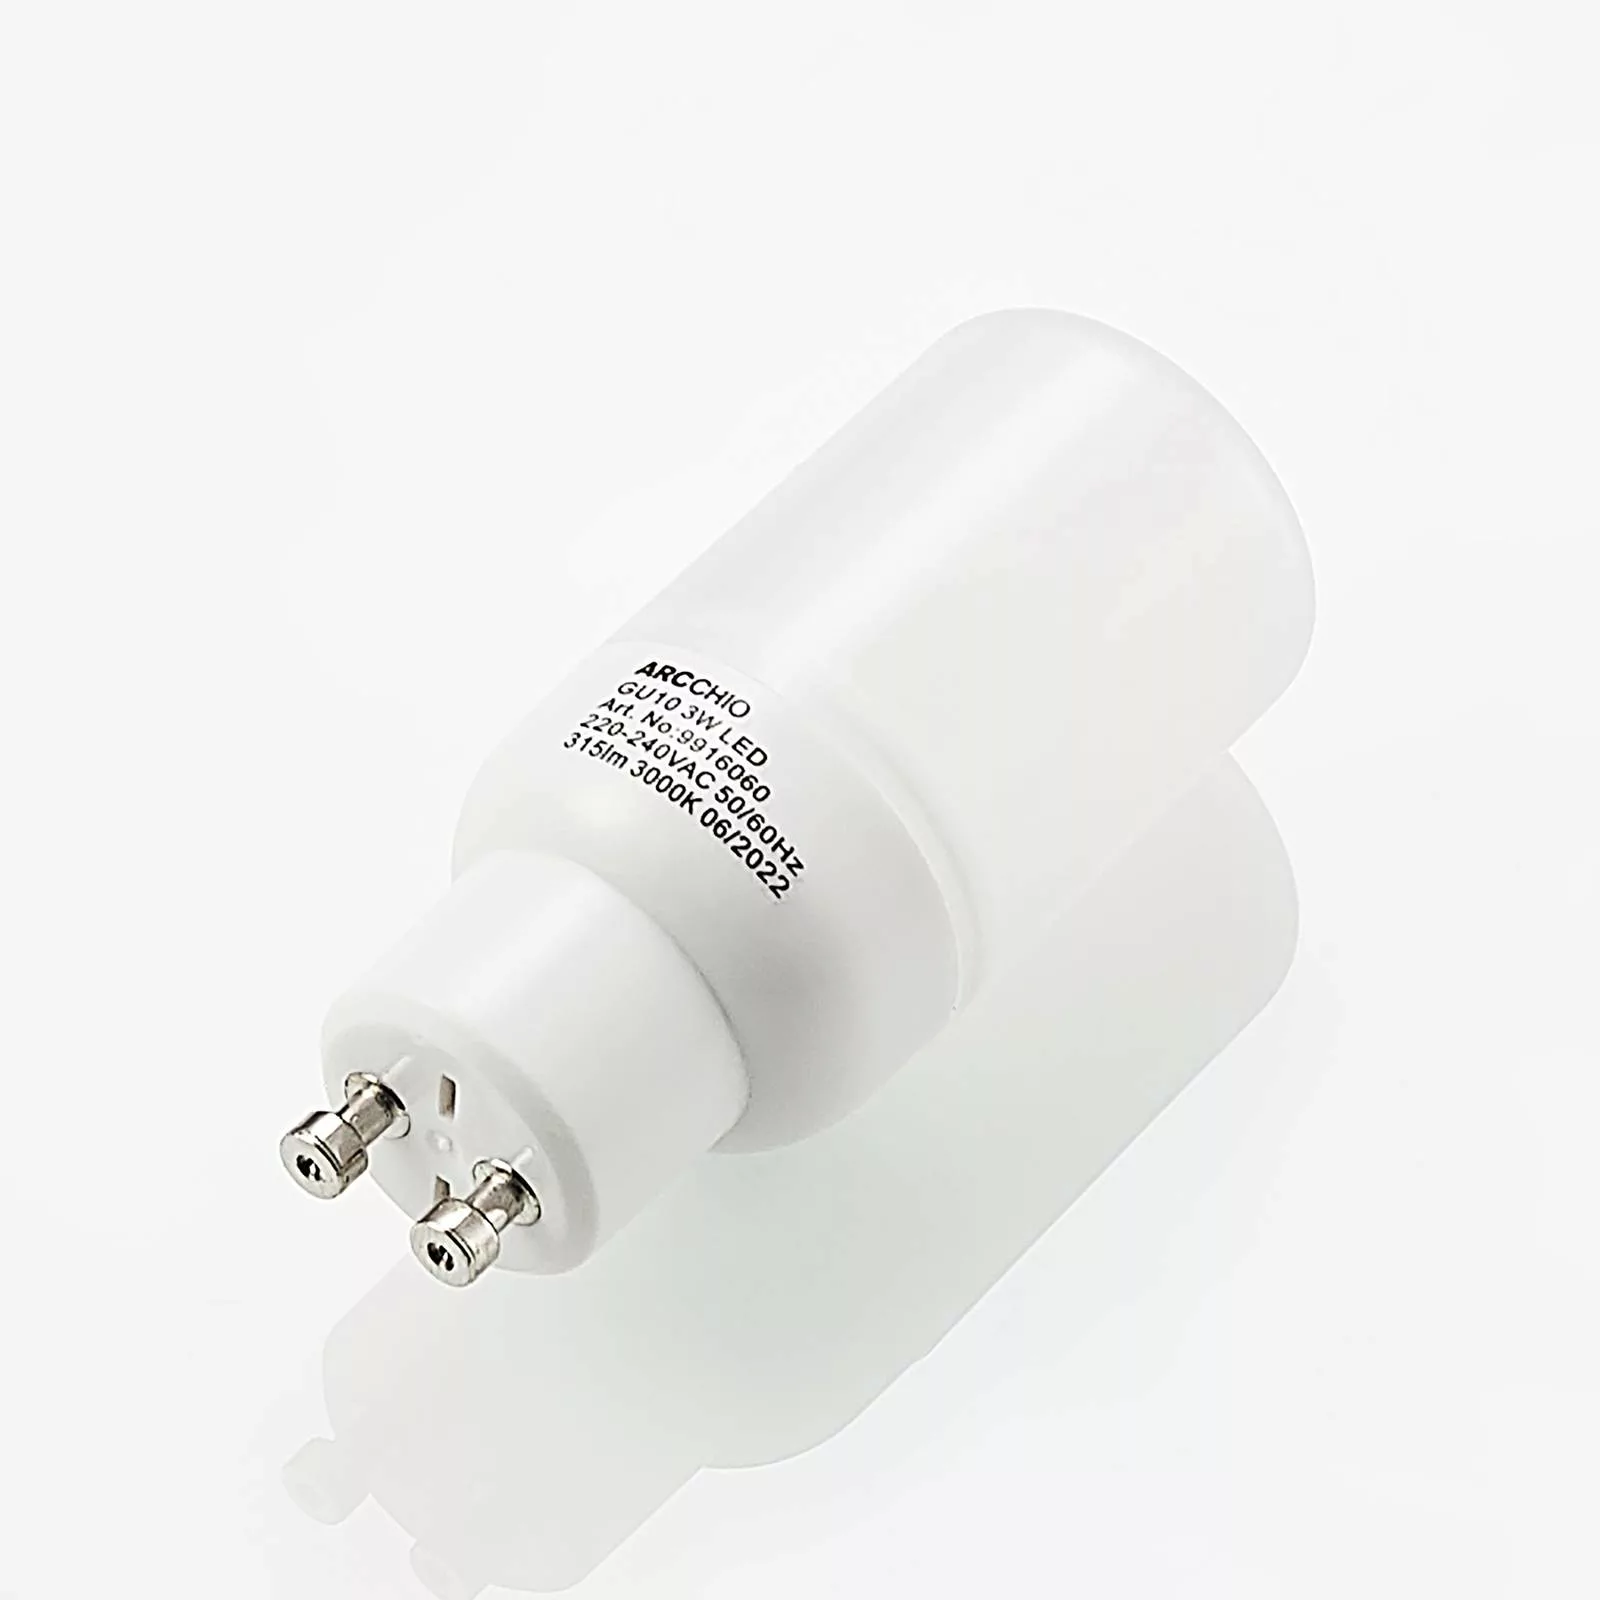 Arcchio LED-Röhrenlampe GU10 3W 3.000K 3er-Set günstig online kaufen